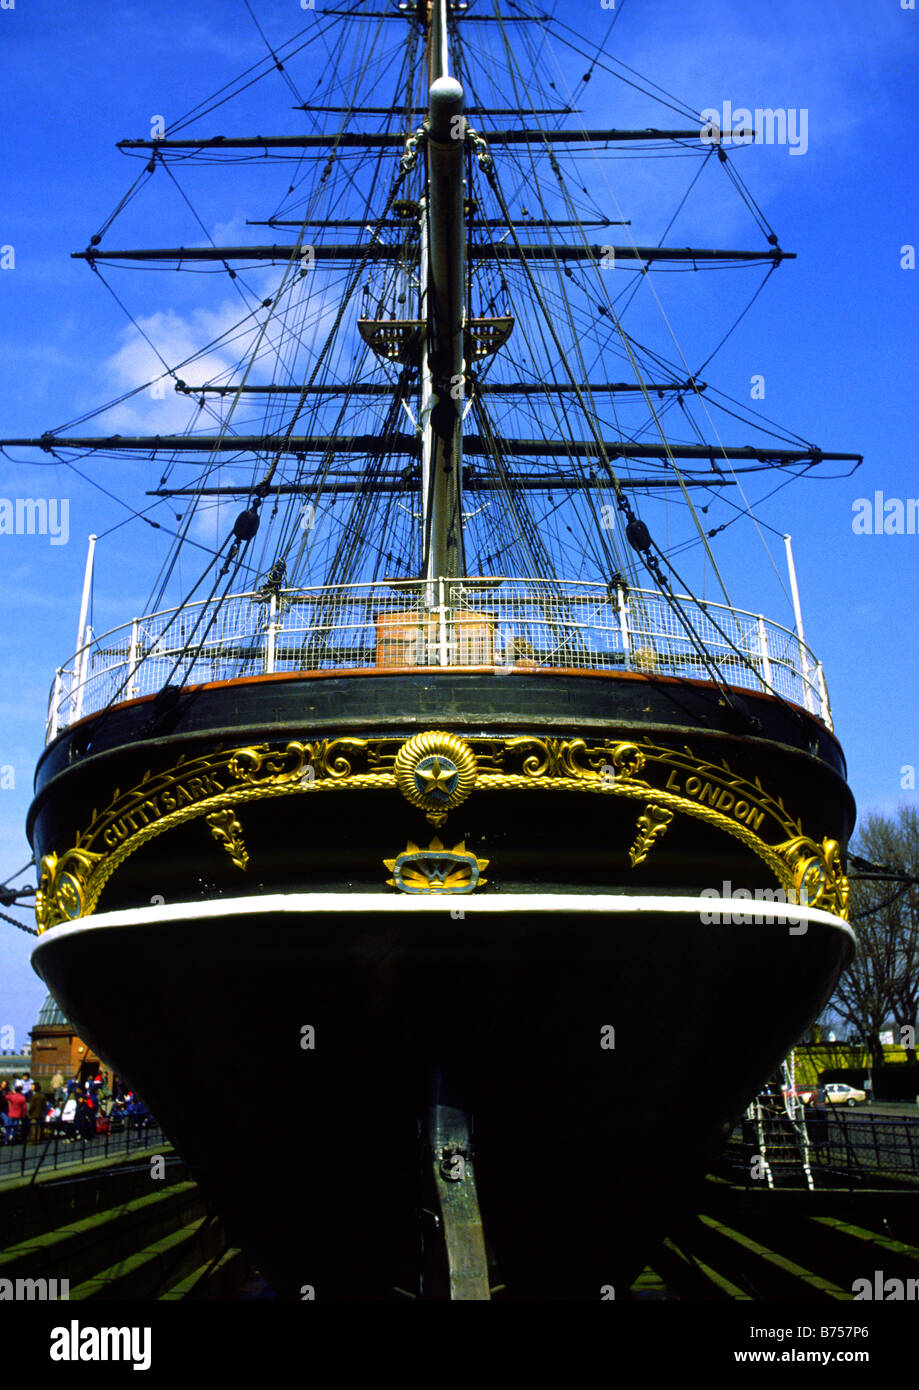 The tea clipper ship Cutty Sark in Greenwich, London, England, UK Stock Photo